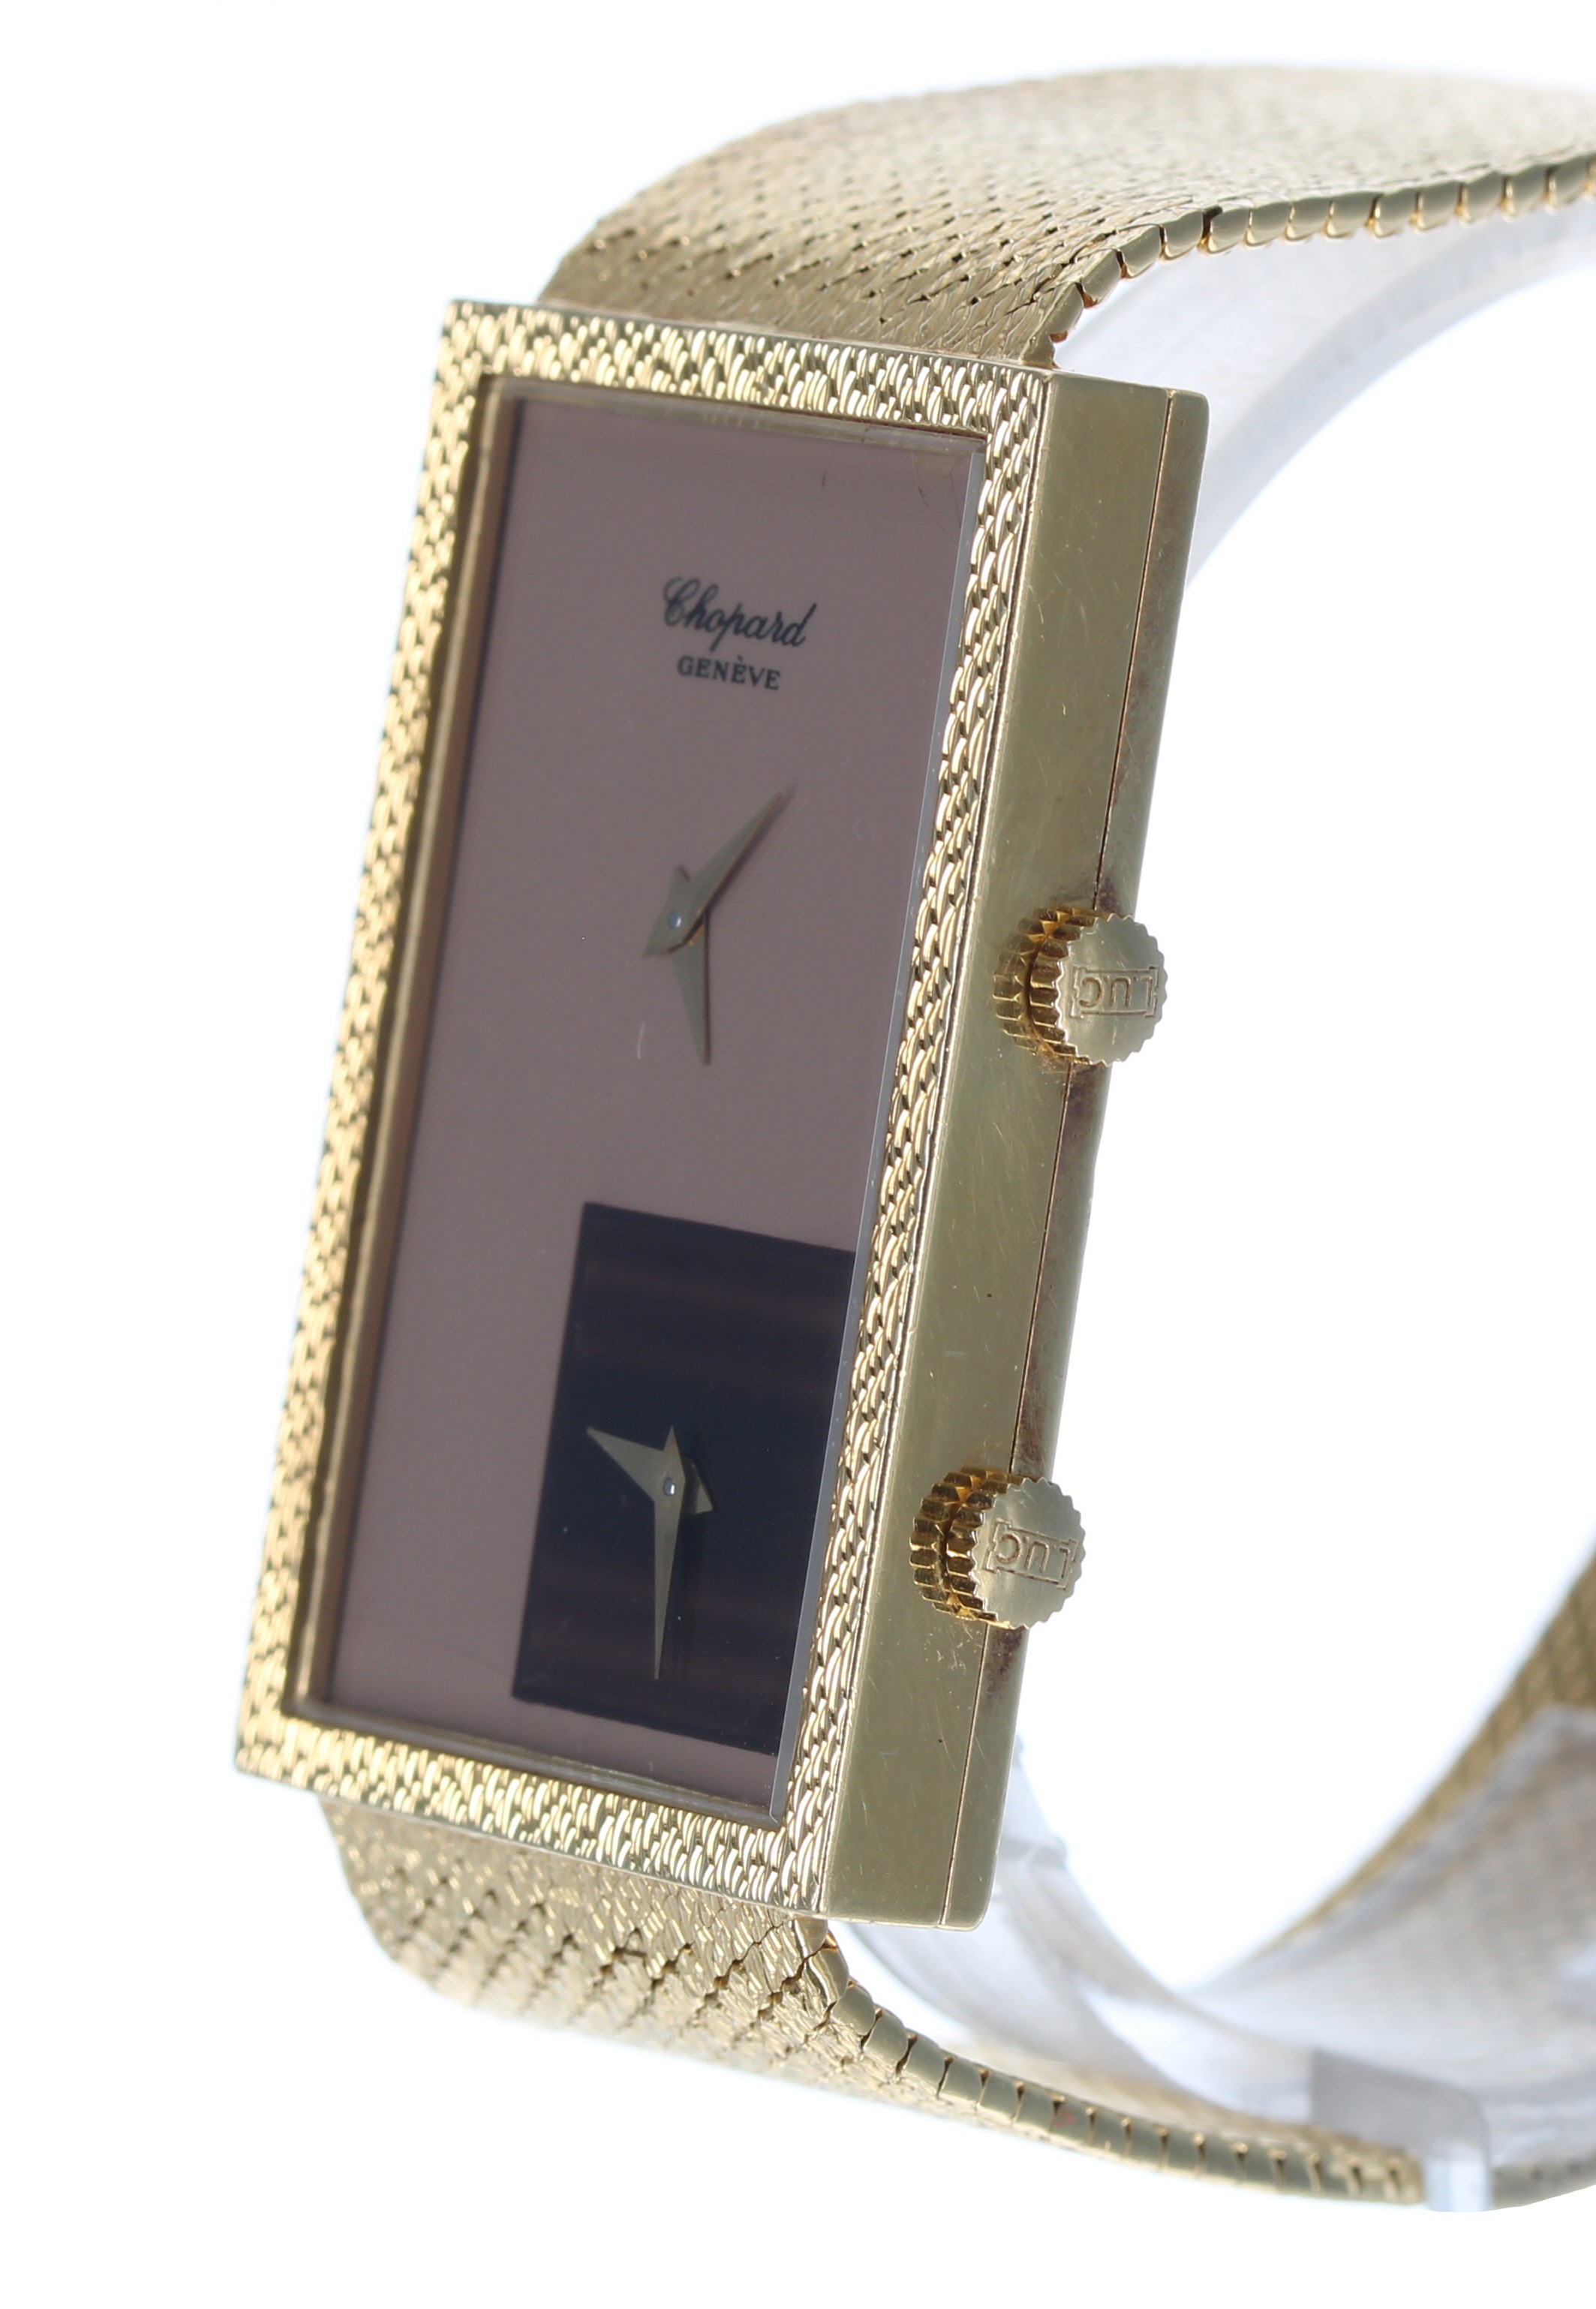 Chopard Genéve 18ct Dual Time Zone 18ct gentleman's wristwatch, ref. 50931, serial no. 138xxx, circa - Image 2 of 5